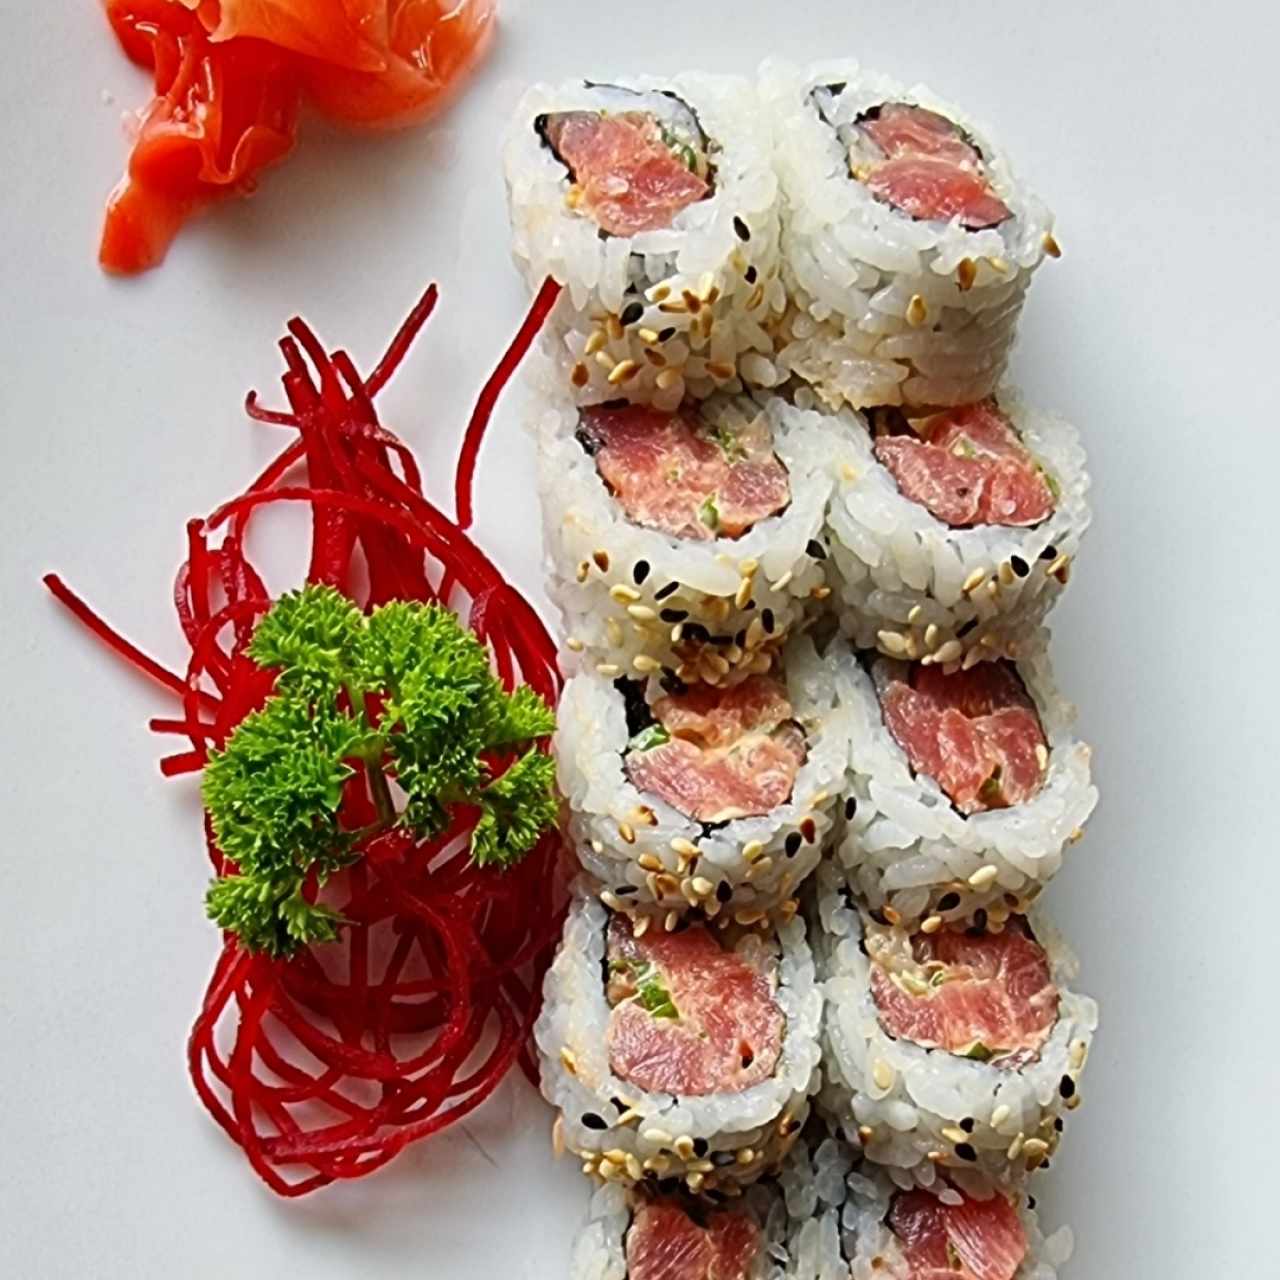 Roll - Spicy Tuna